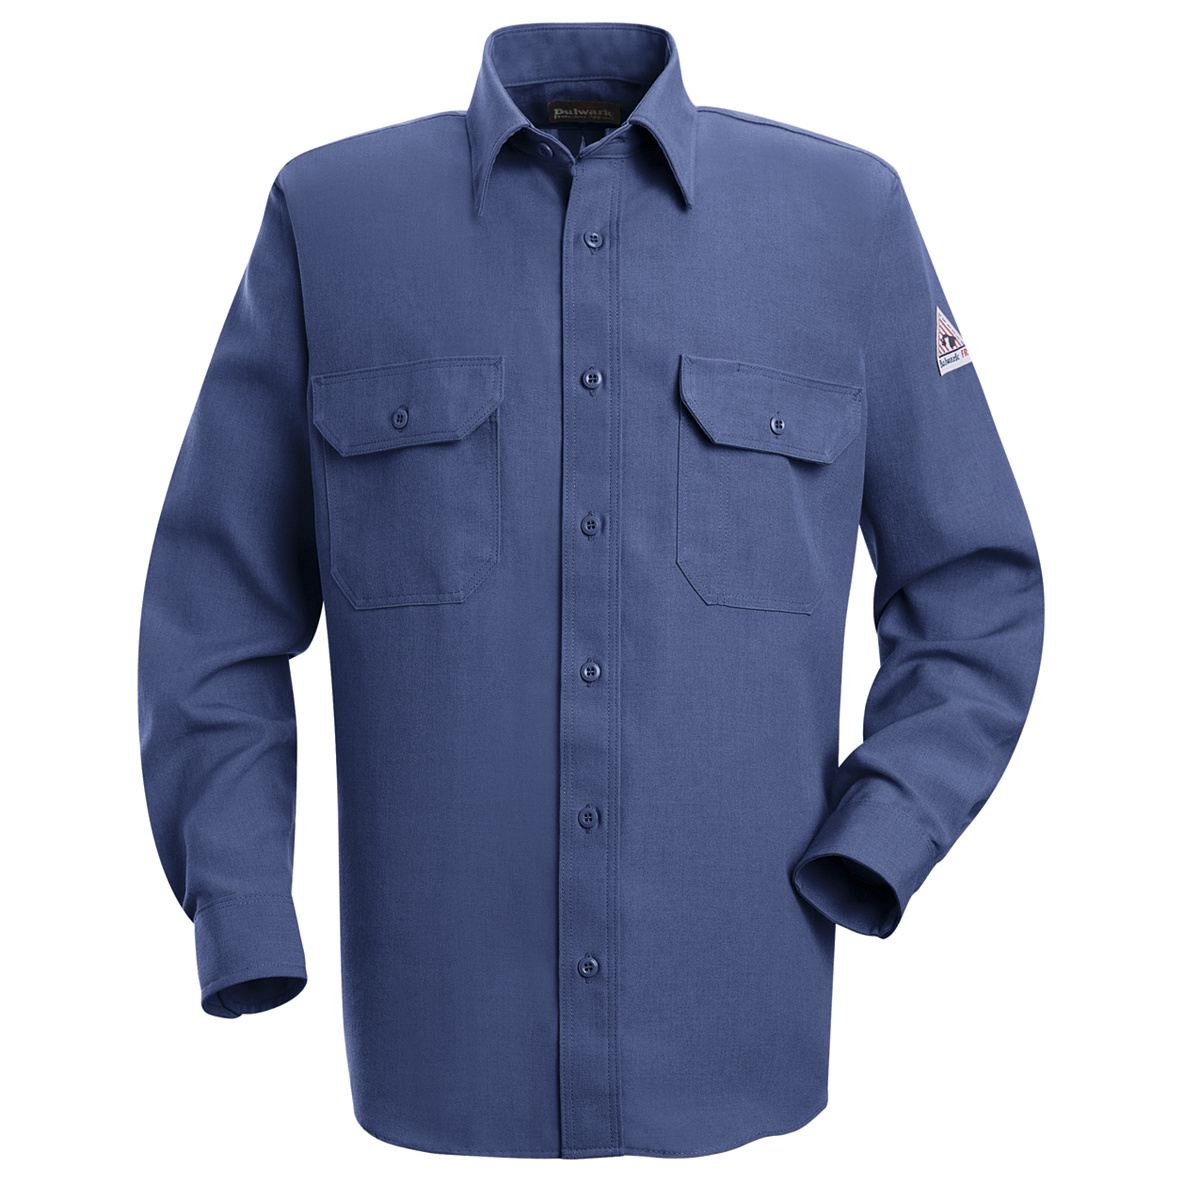 Bulwark® X-Large Tall Gulf Blue Nomex® IIIA/Nomex® Aramid/Kevlar® Aramid Flame Resistant Uniform Shirt With Button Front Closure